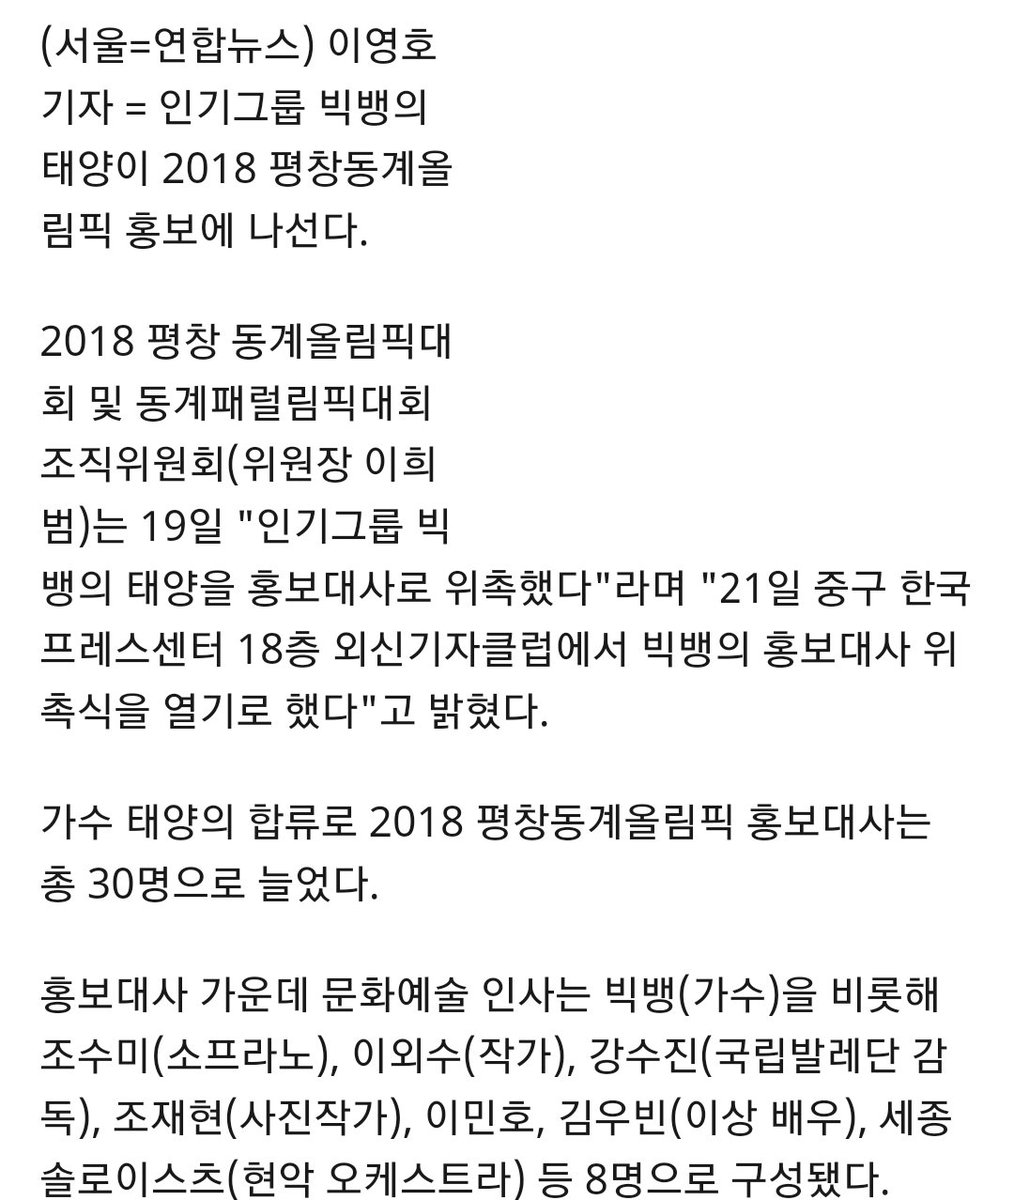 Taeyang appointed as honorary ambassador for the PyeongChang 2018 Olympics (1)